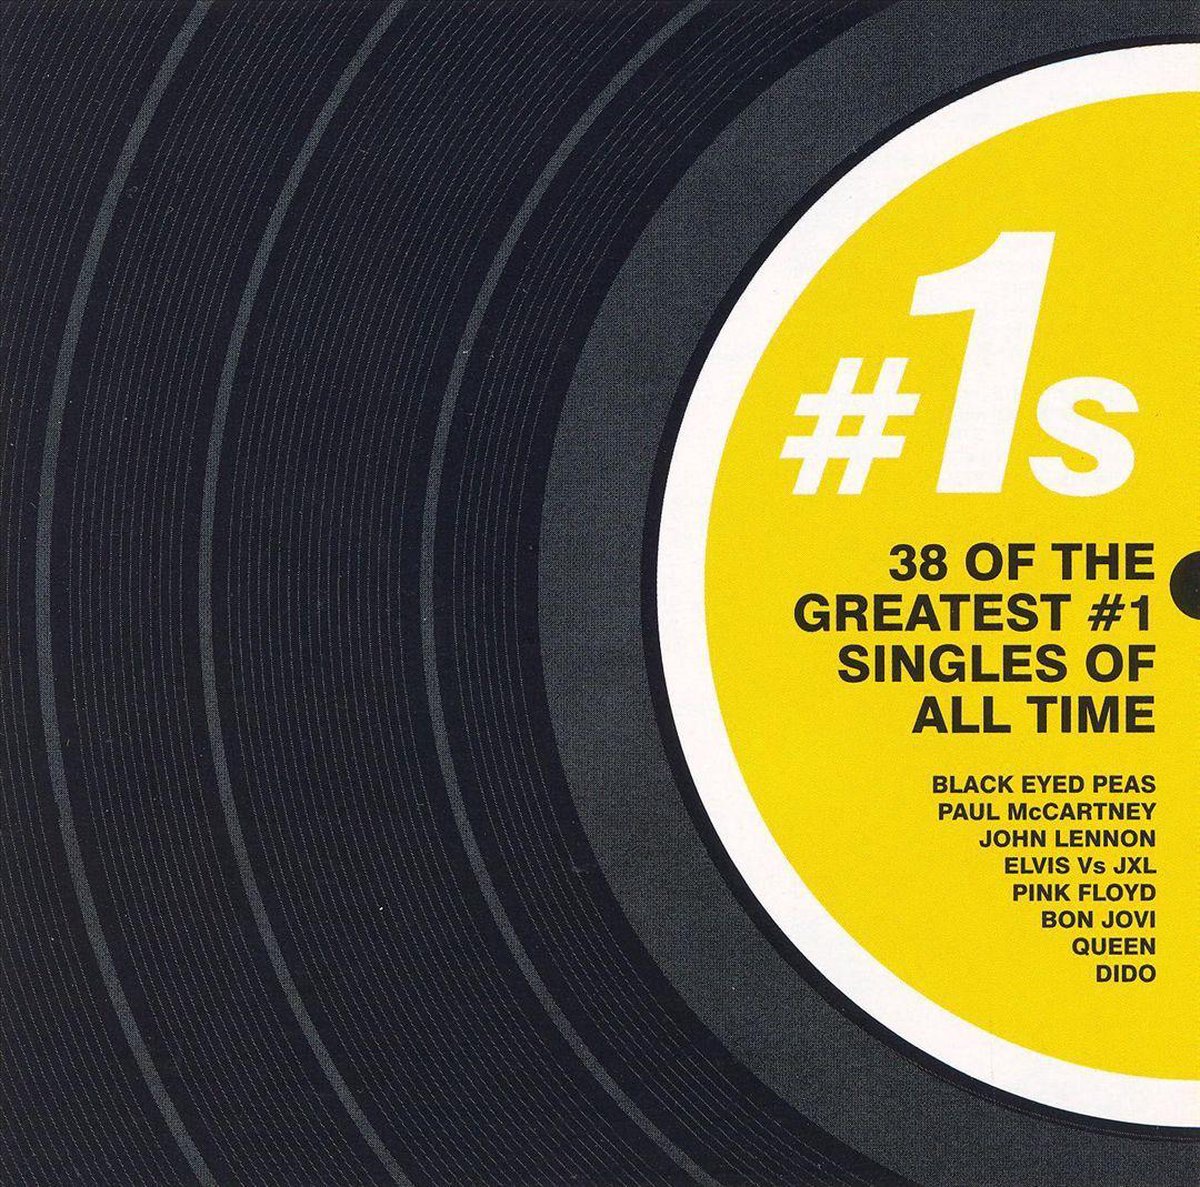 Популярные синглы. Лейбл: Universal Music. Сборник лучших синглов 1. Диск Culture Club Greatest Hits CD. Jazz 1s Hits (Universal Music Group International 2007) фото альбома.